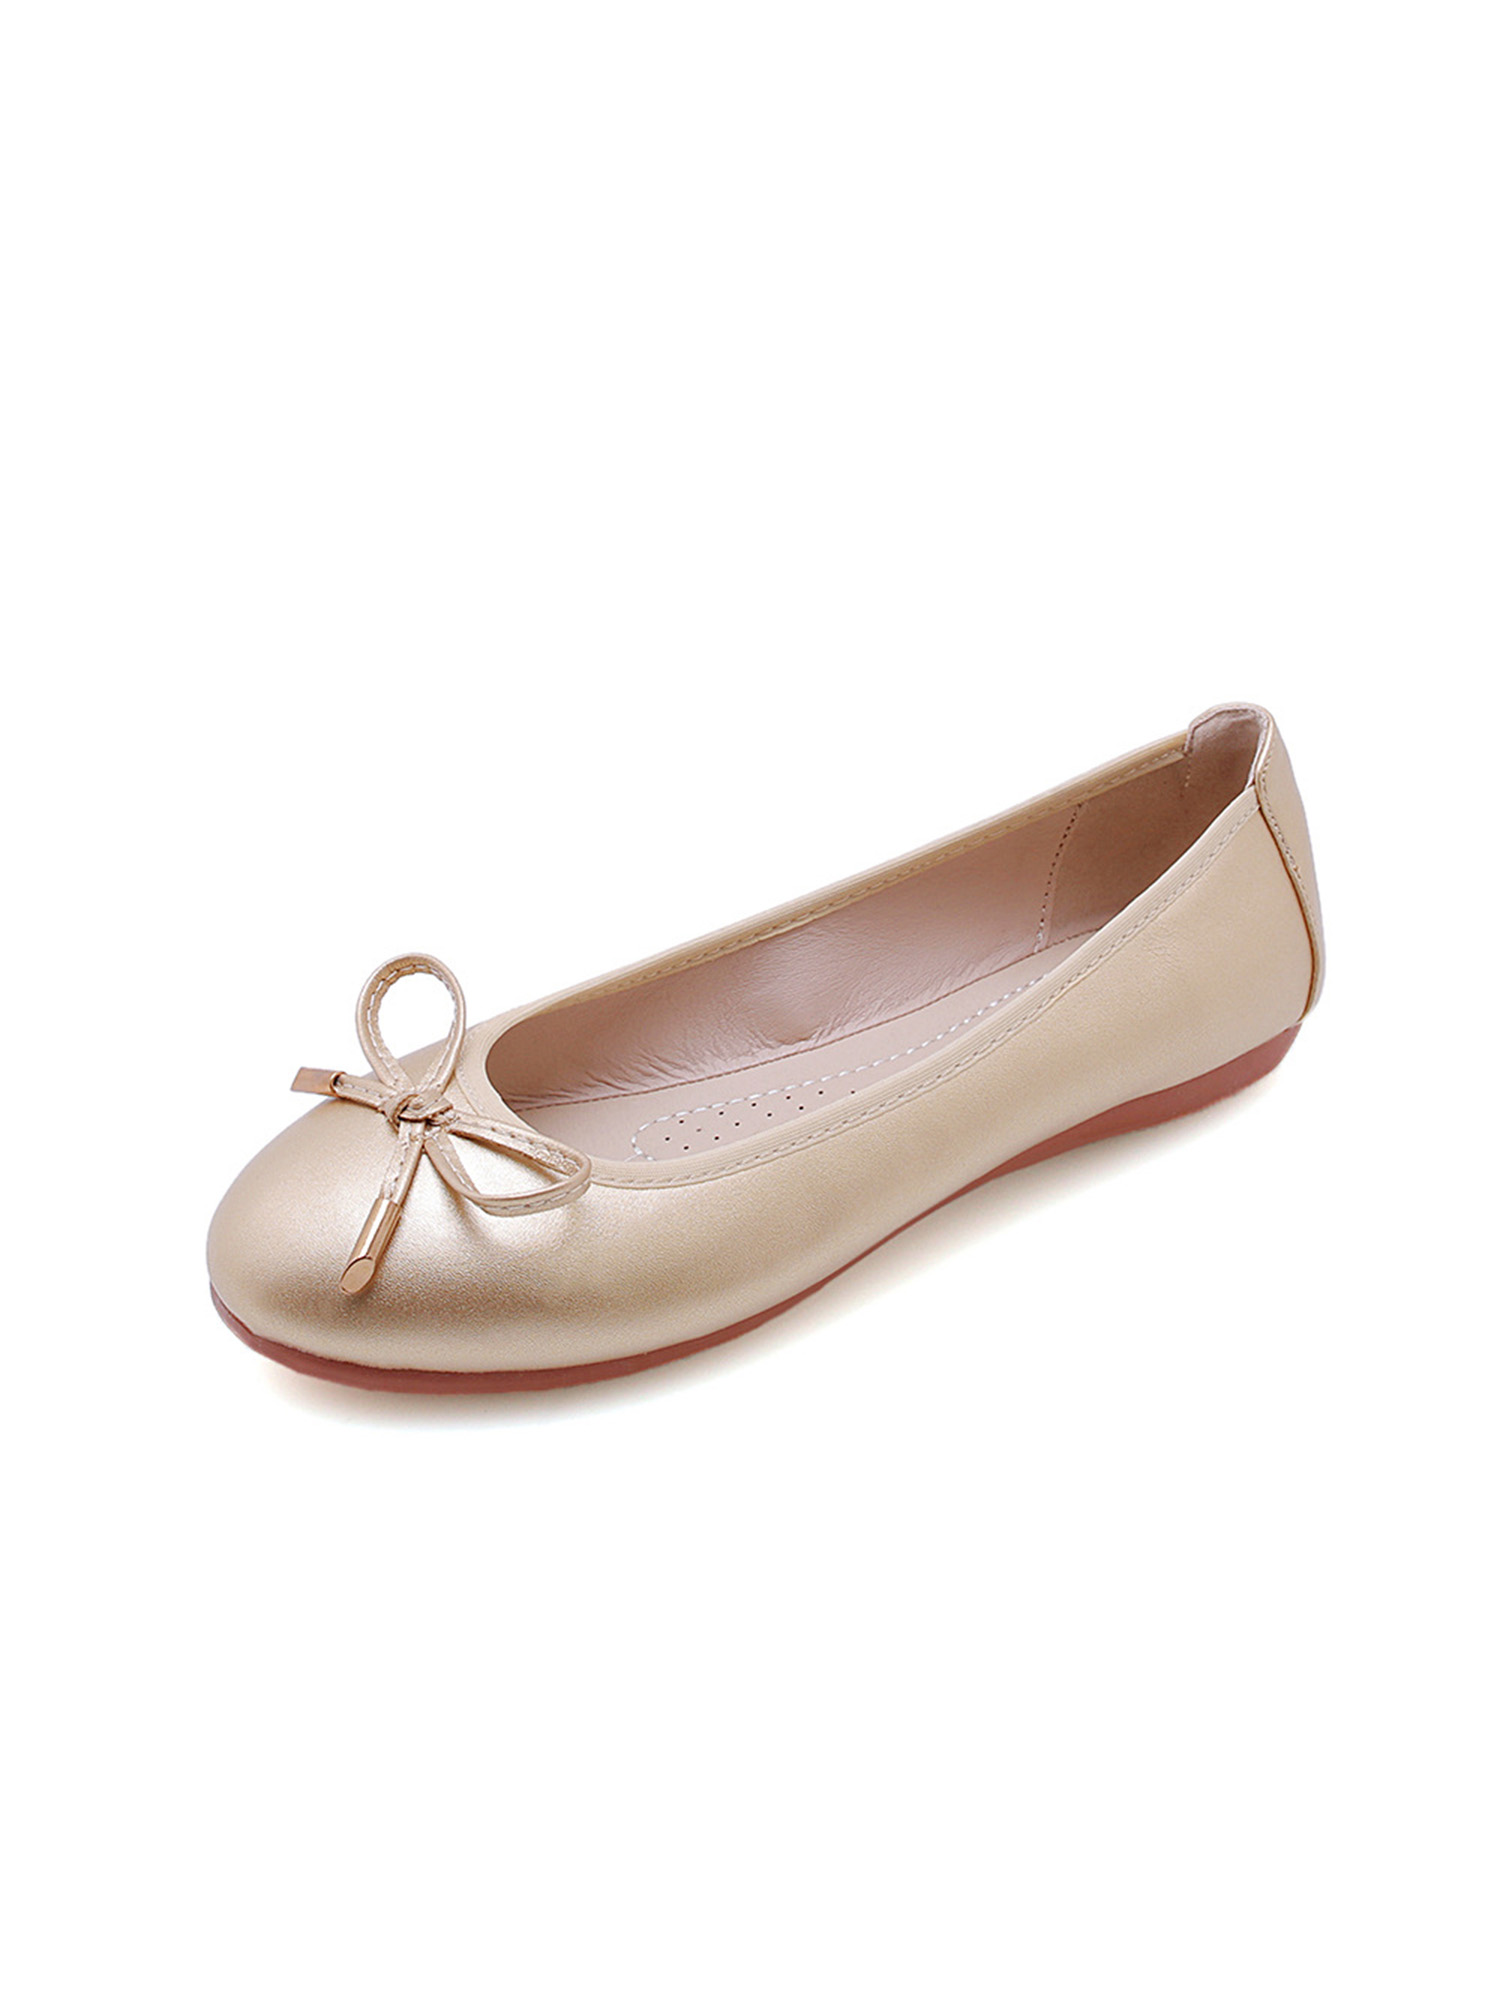 Avamo Women Flat Shoes Comfortable Slip on Round Toe Ballet Flats Casual Walking Shoes - image 1 of 3